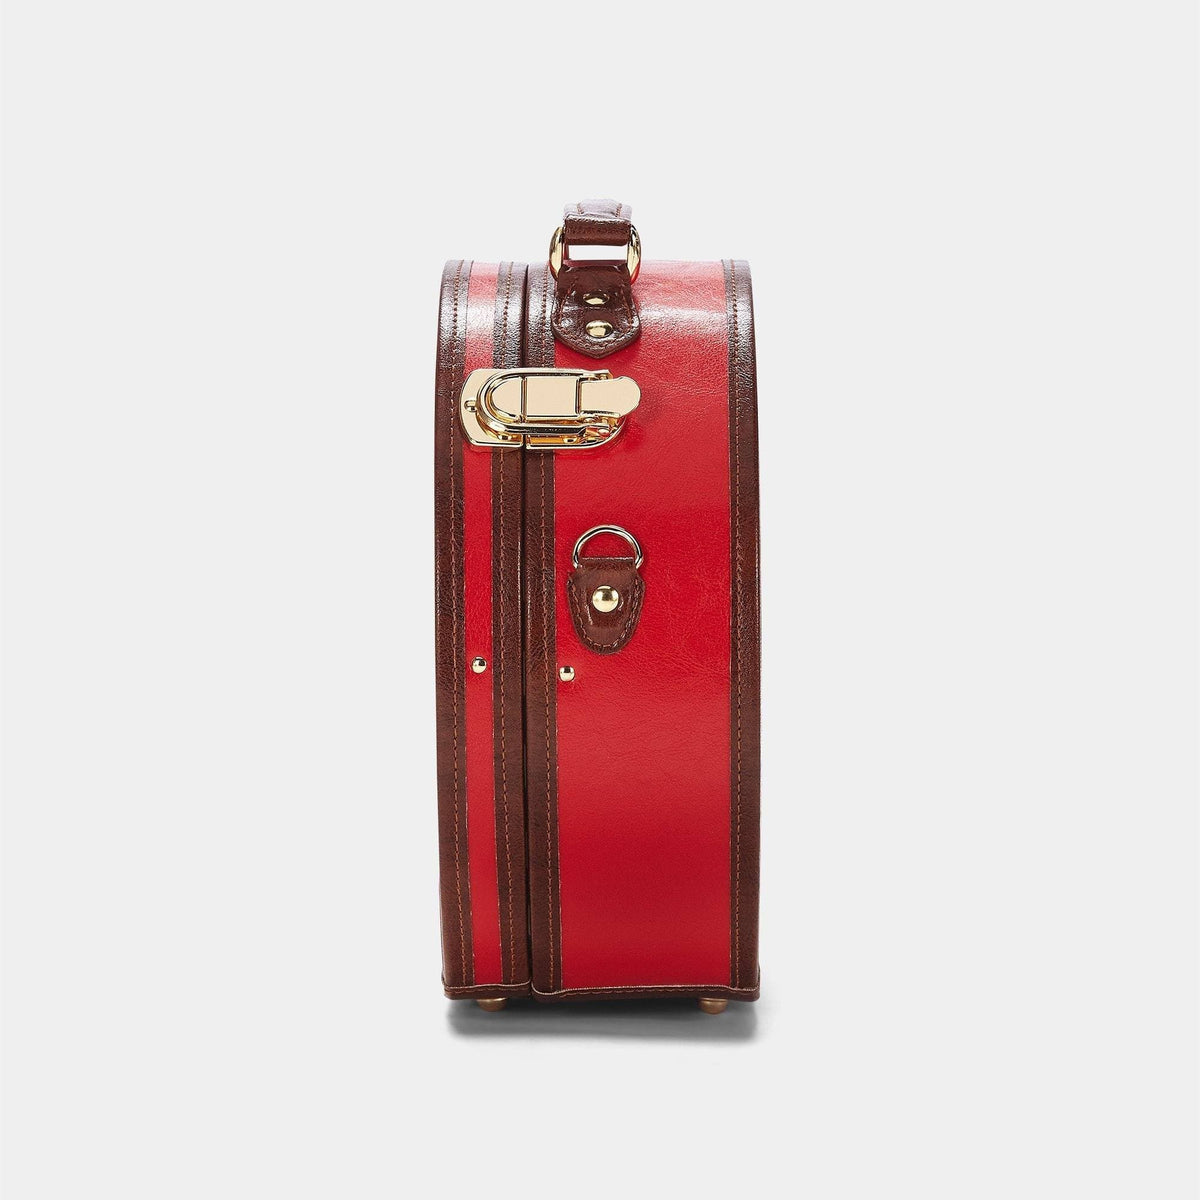 SteamLine Luggage The Entrepreneur Small Hatbox